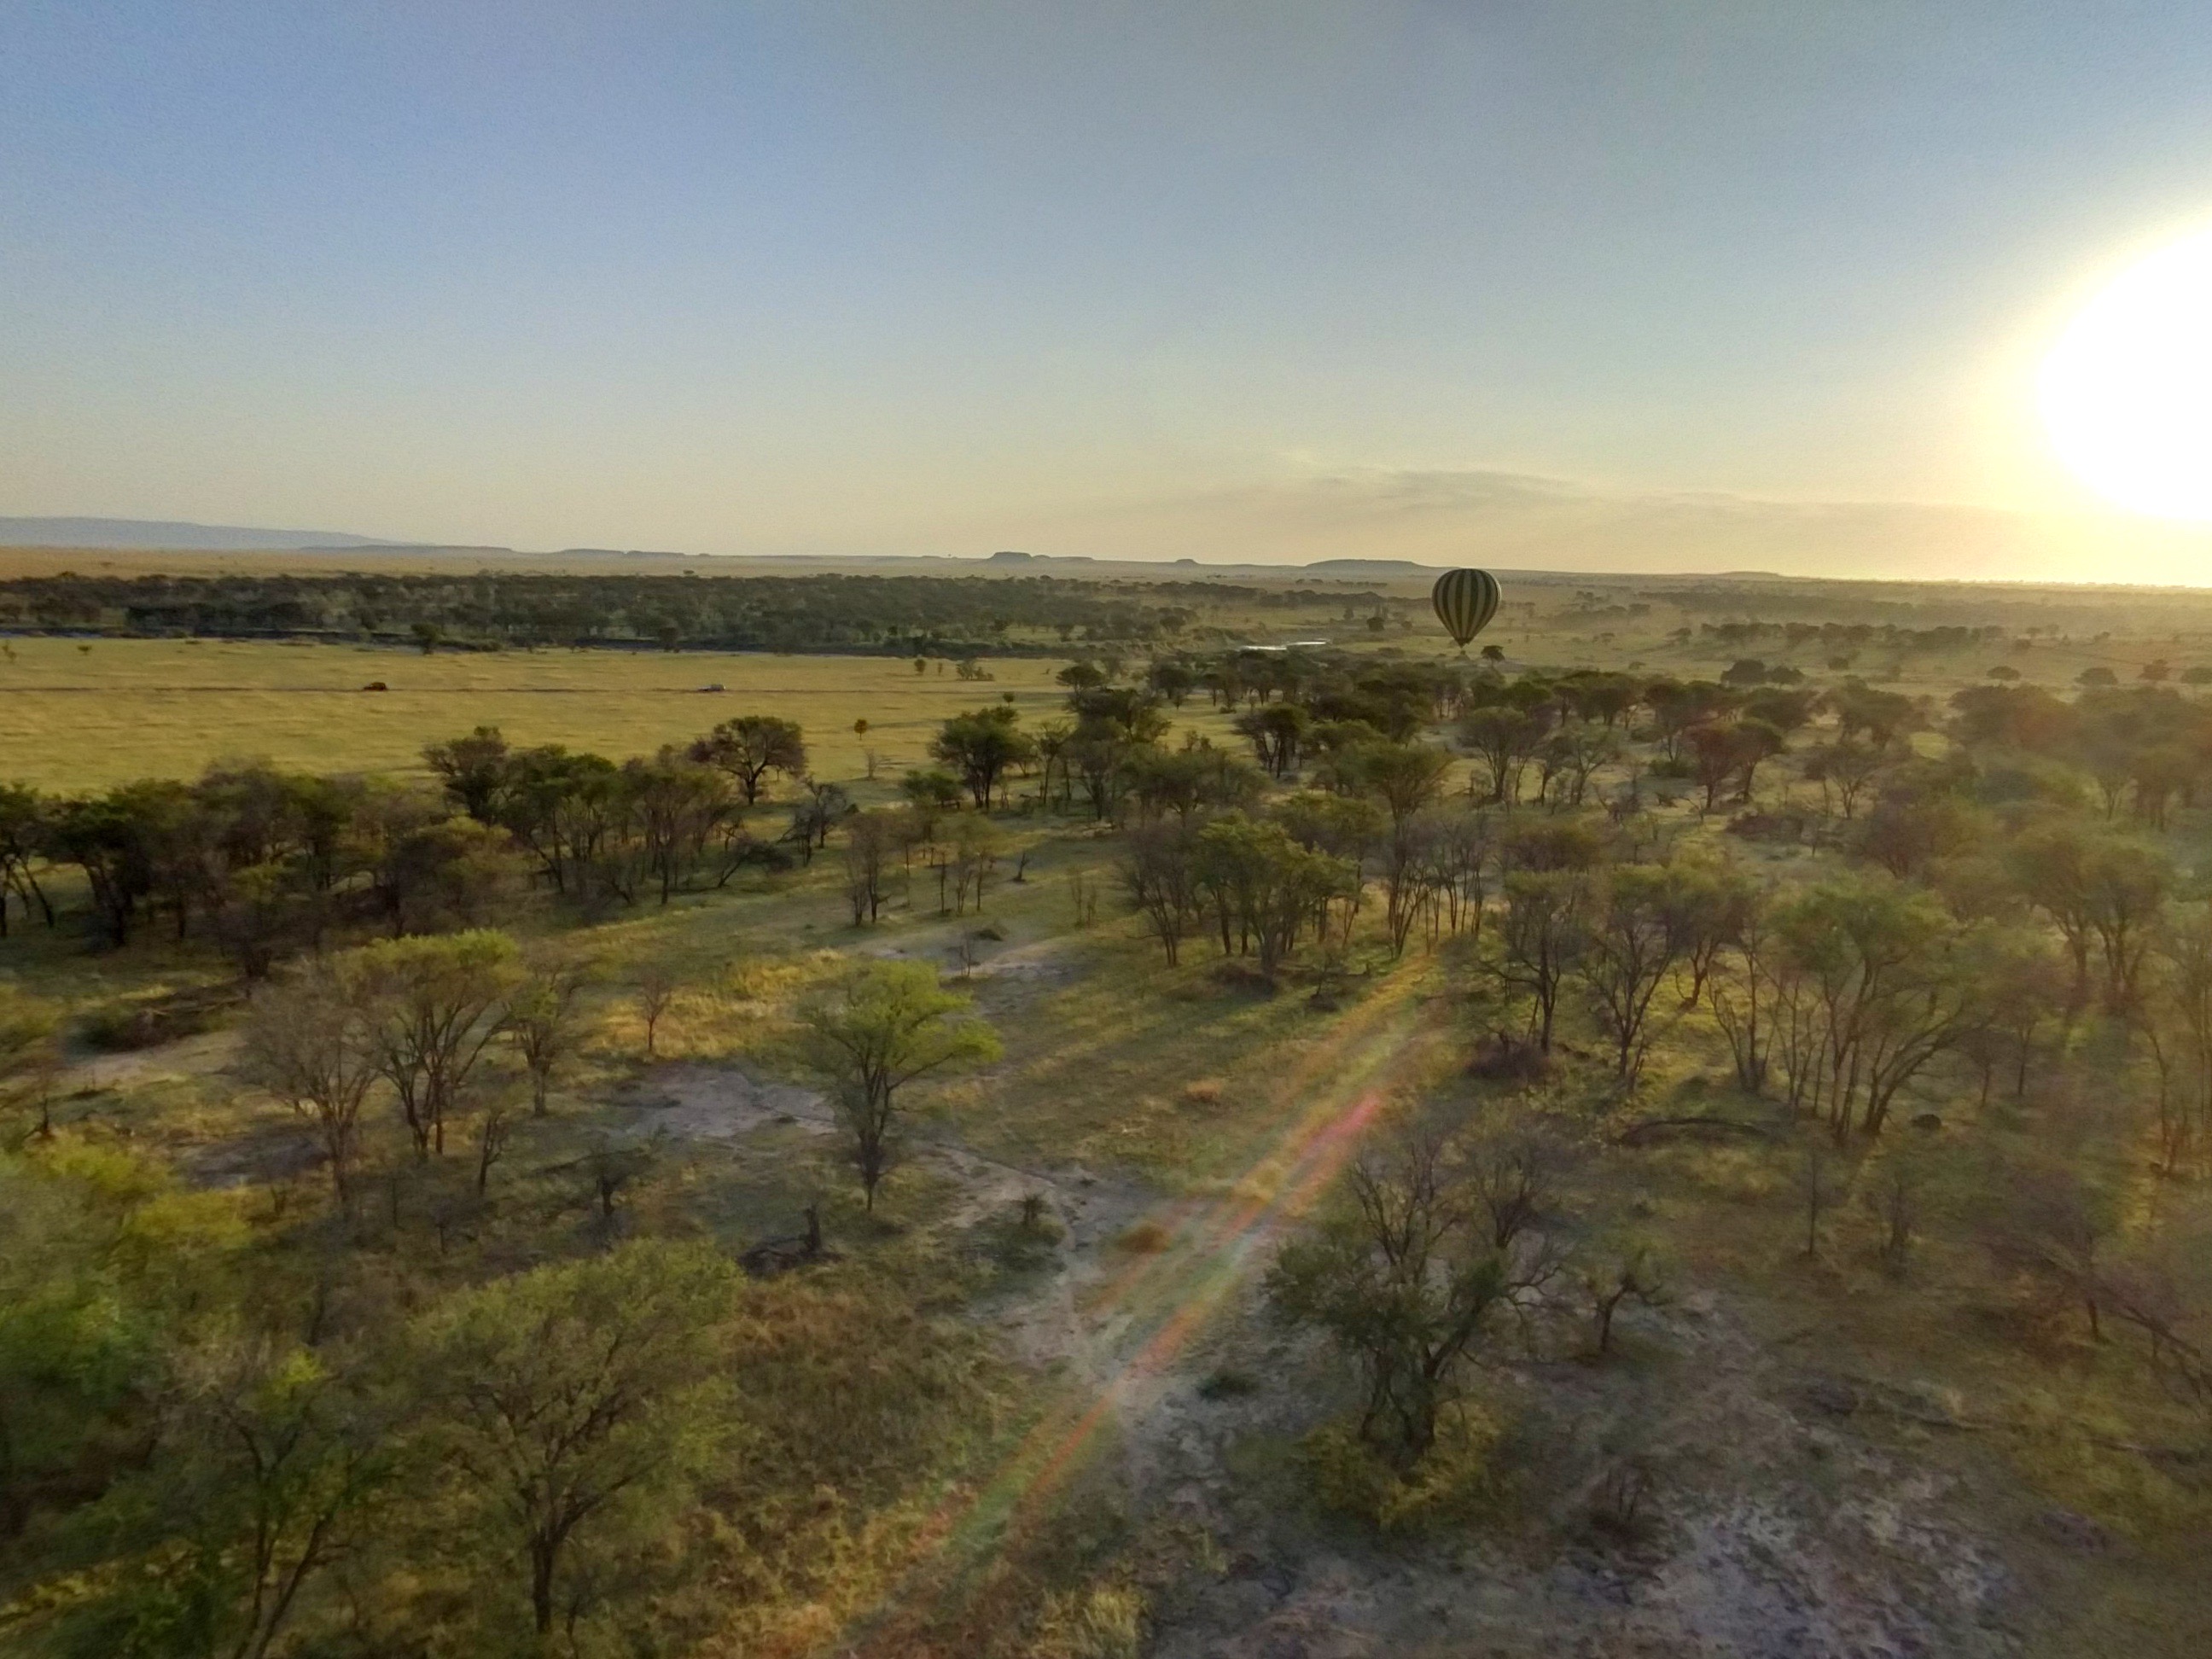 View of Tanzania plains from a hot air balloon